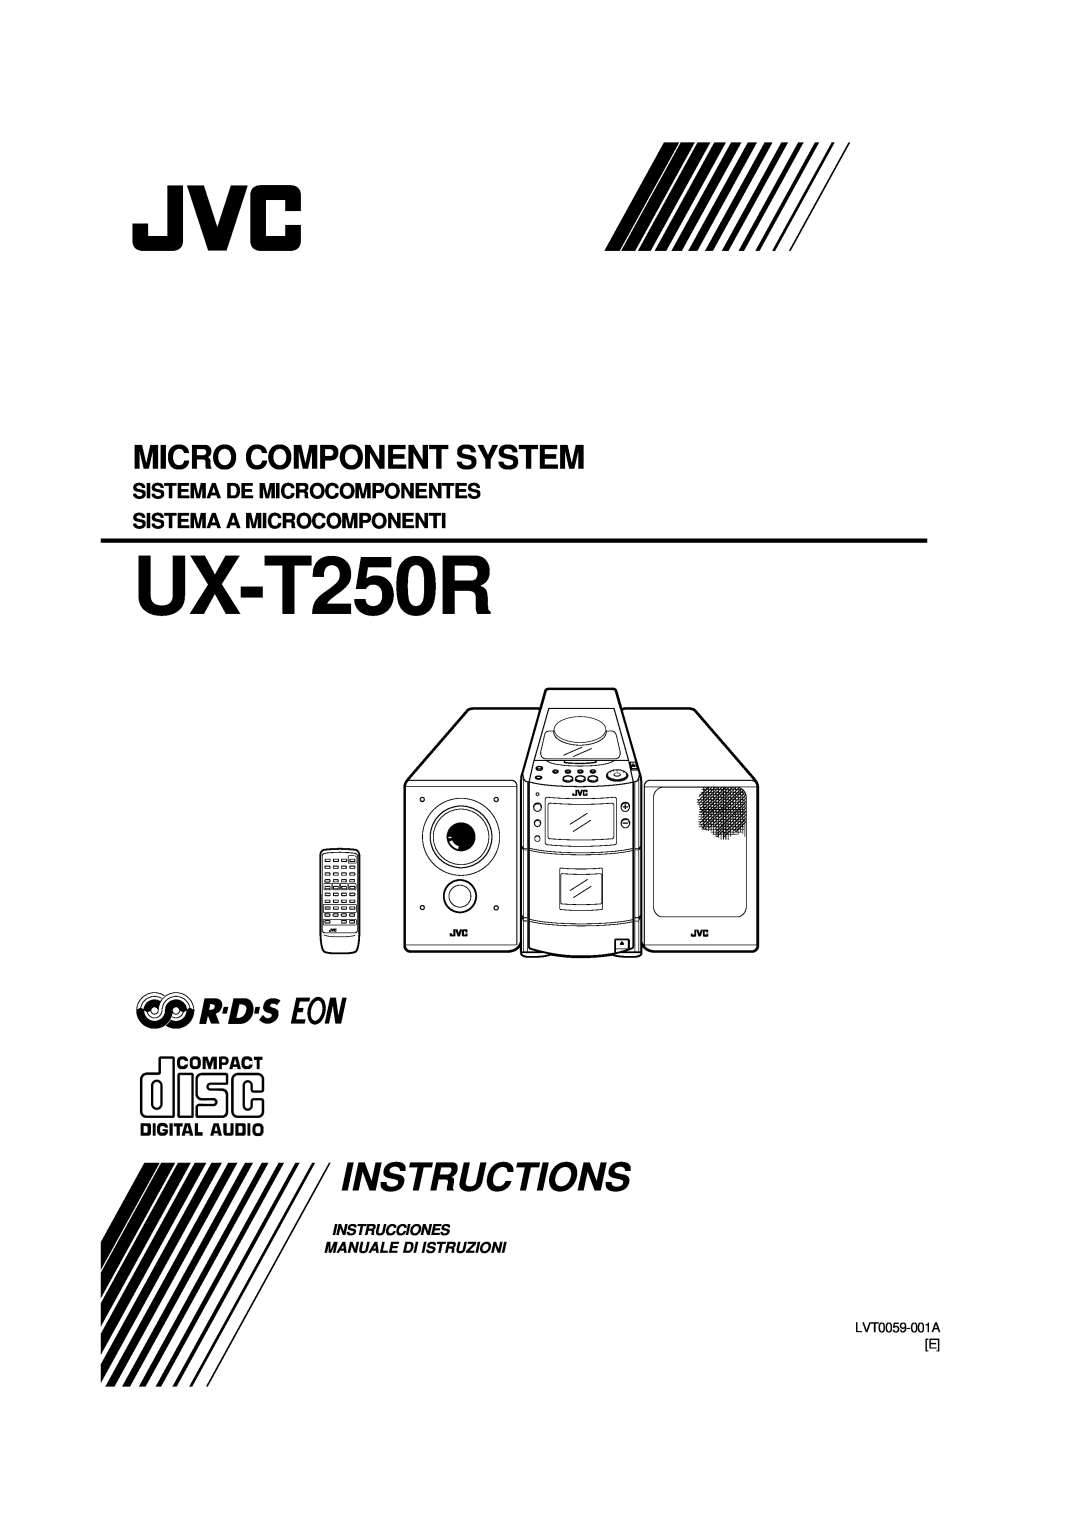 JVC UX-T250R manual Instrucciones Manuale Di Istruzioni, Instructions, Micro Component System, Sistema De Microcomponentes 